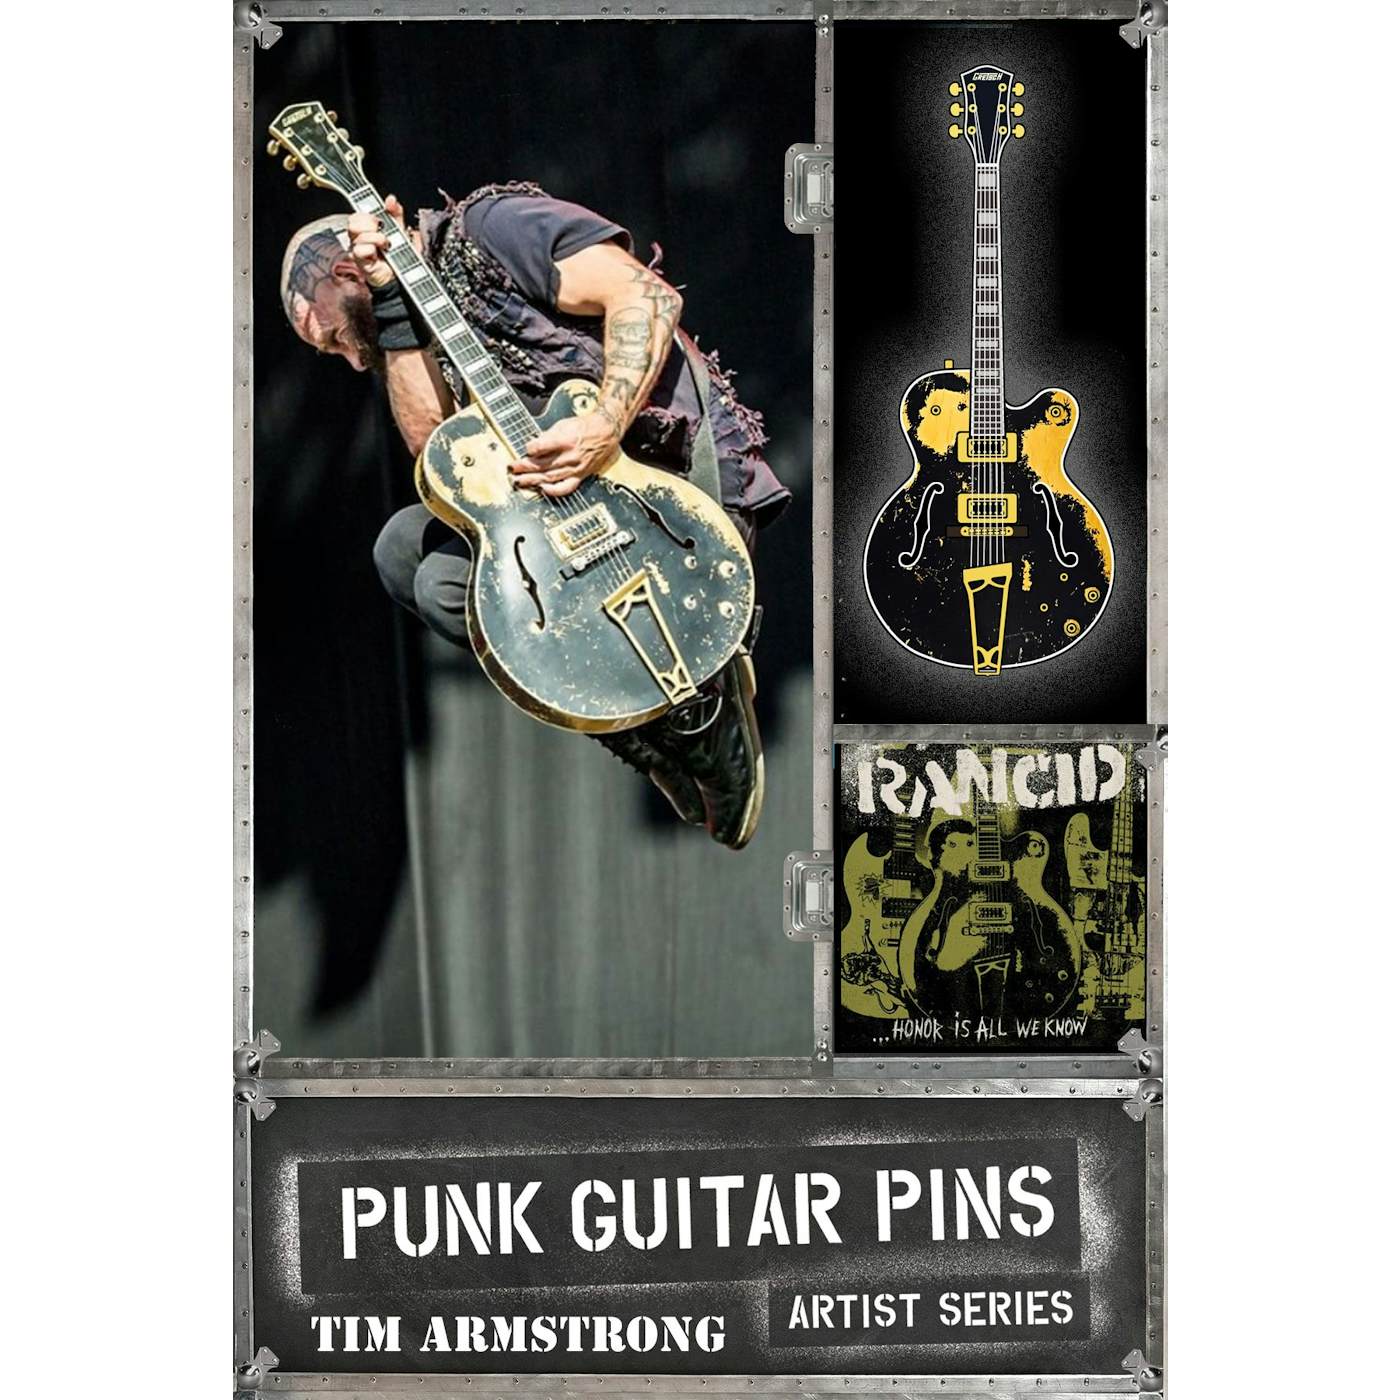 Tim Armstrong "Gretsch" Punk Guitar Pin Series #3